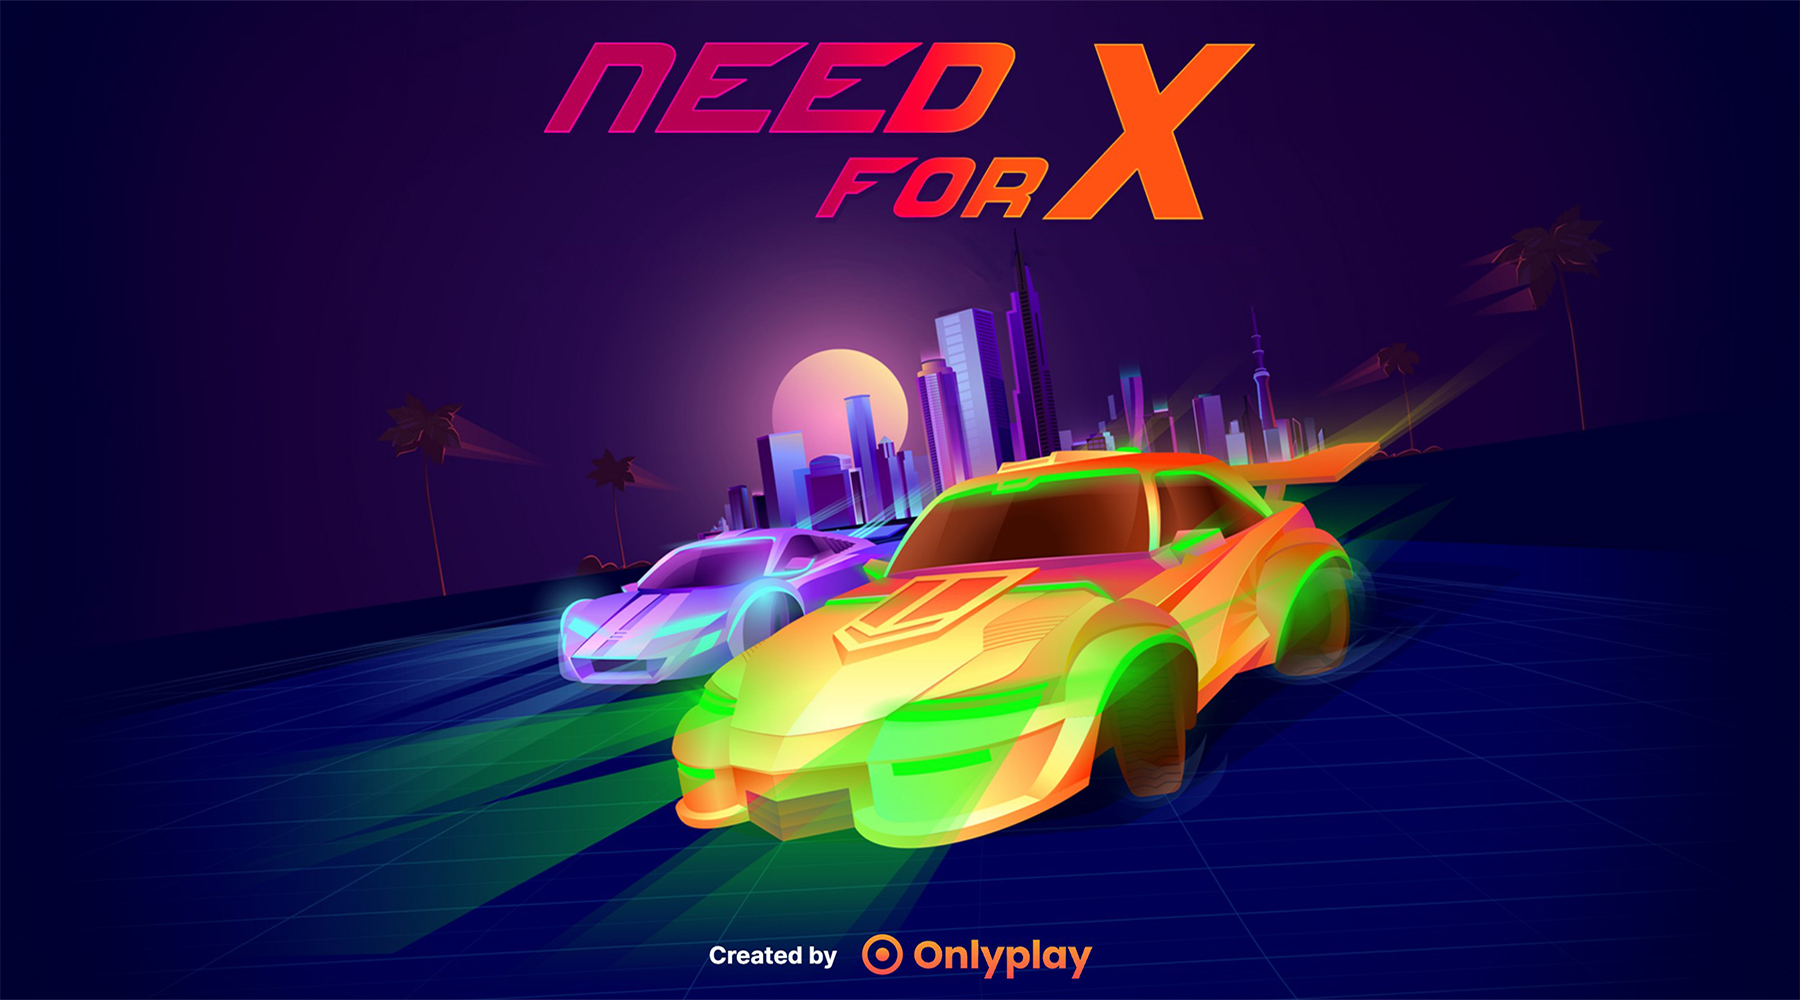 Need For X від OnlyPlay